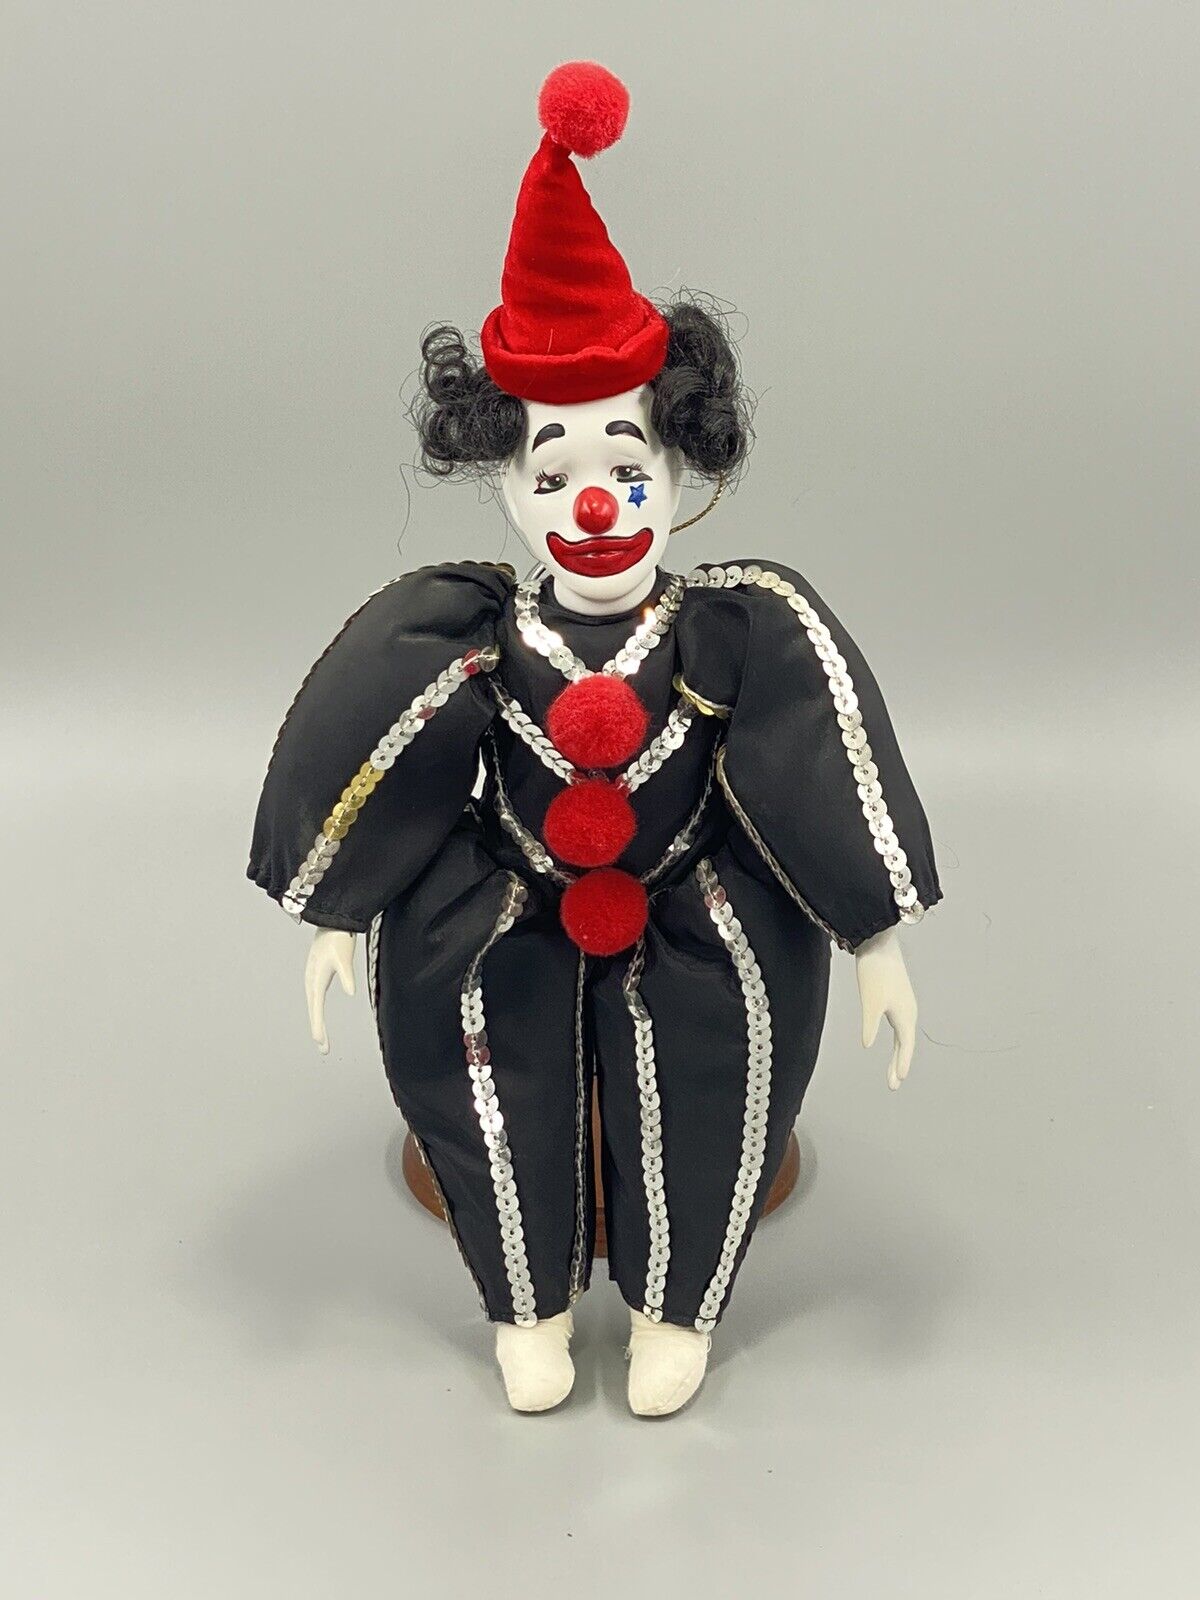 VTG 1986 Schmid 14” Clown CAMPERT Costume Design - Scary Dark Clothing- RARE